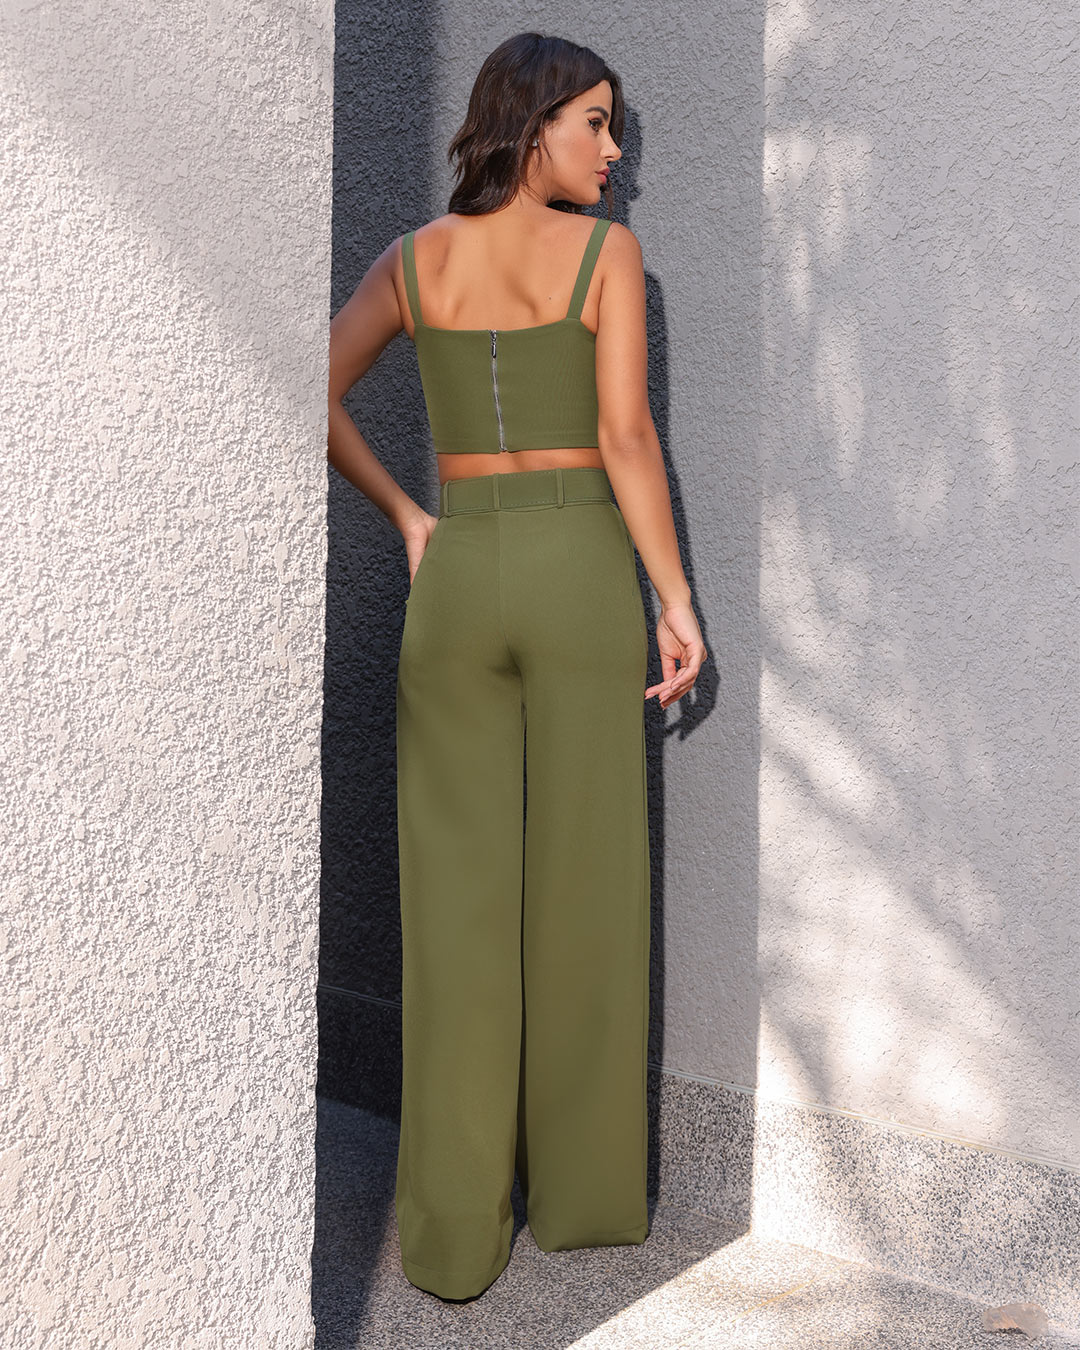 Dot Clothing - Conjunto Dot Clothing Pantalona e Cropped Verde - 1737VERDE